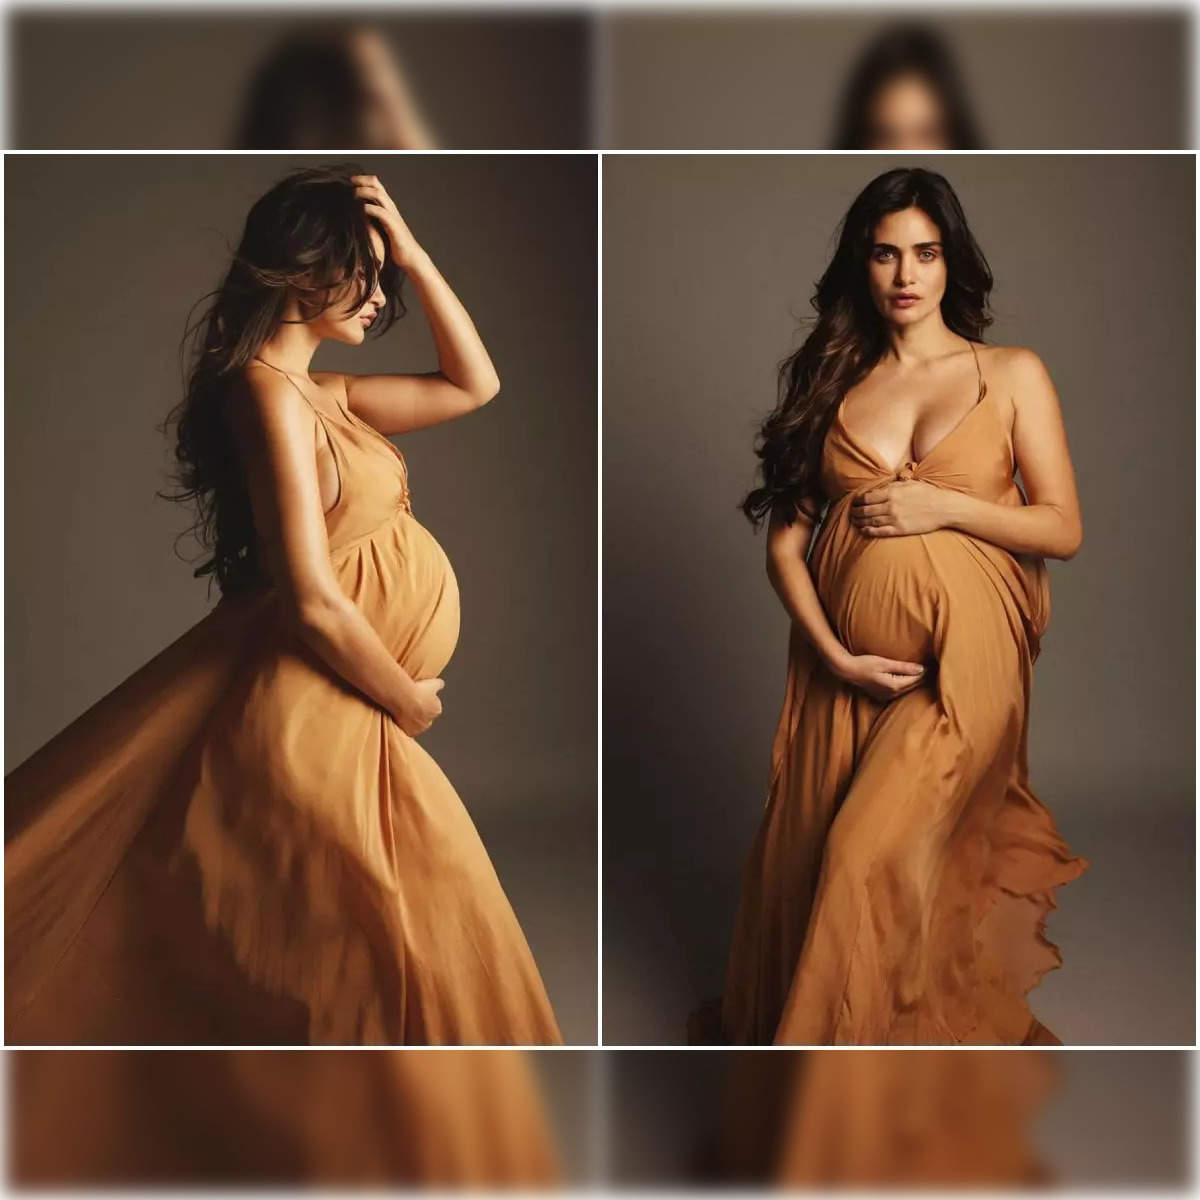 arjun rampals girlfriend gabriella demetriades announces second pregnancy shares pics from maternity shoot